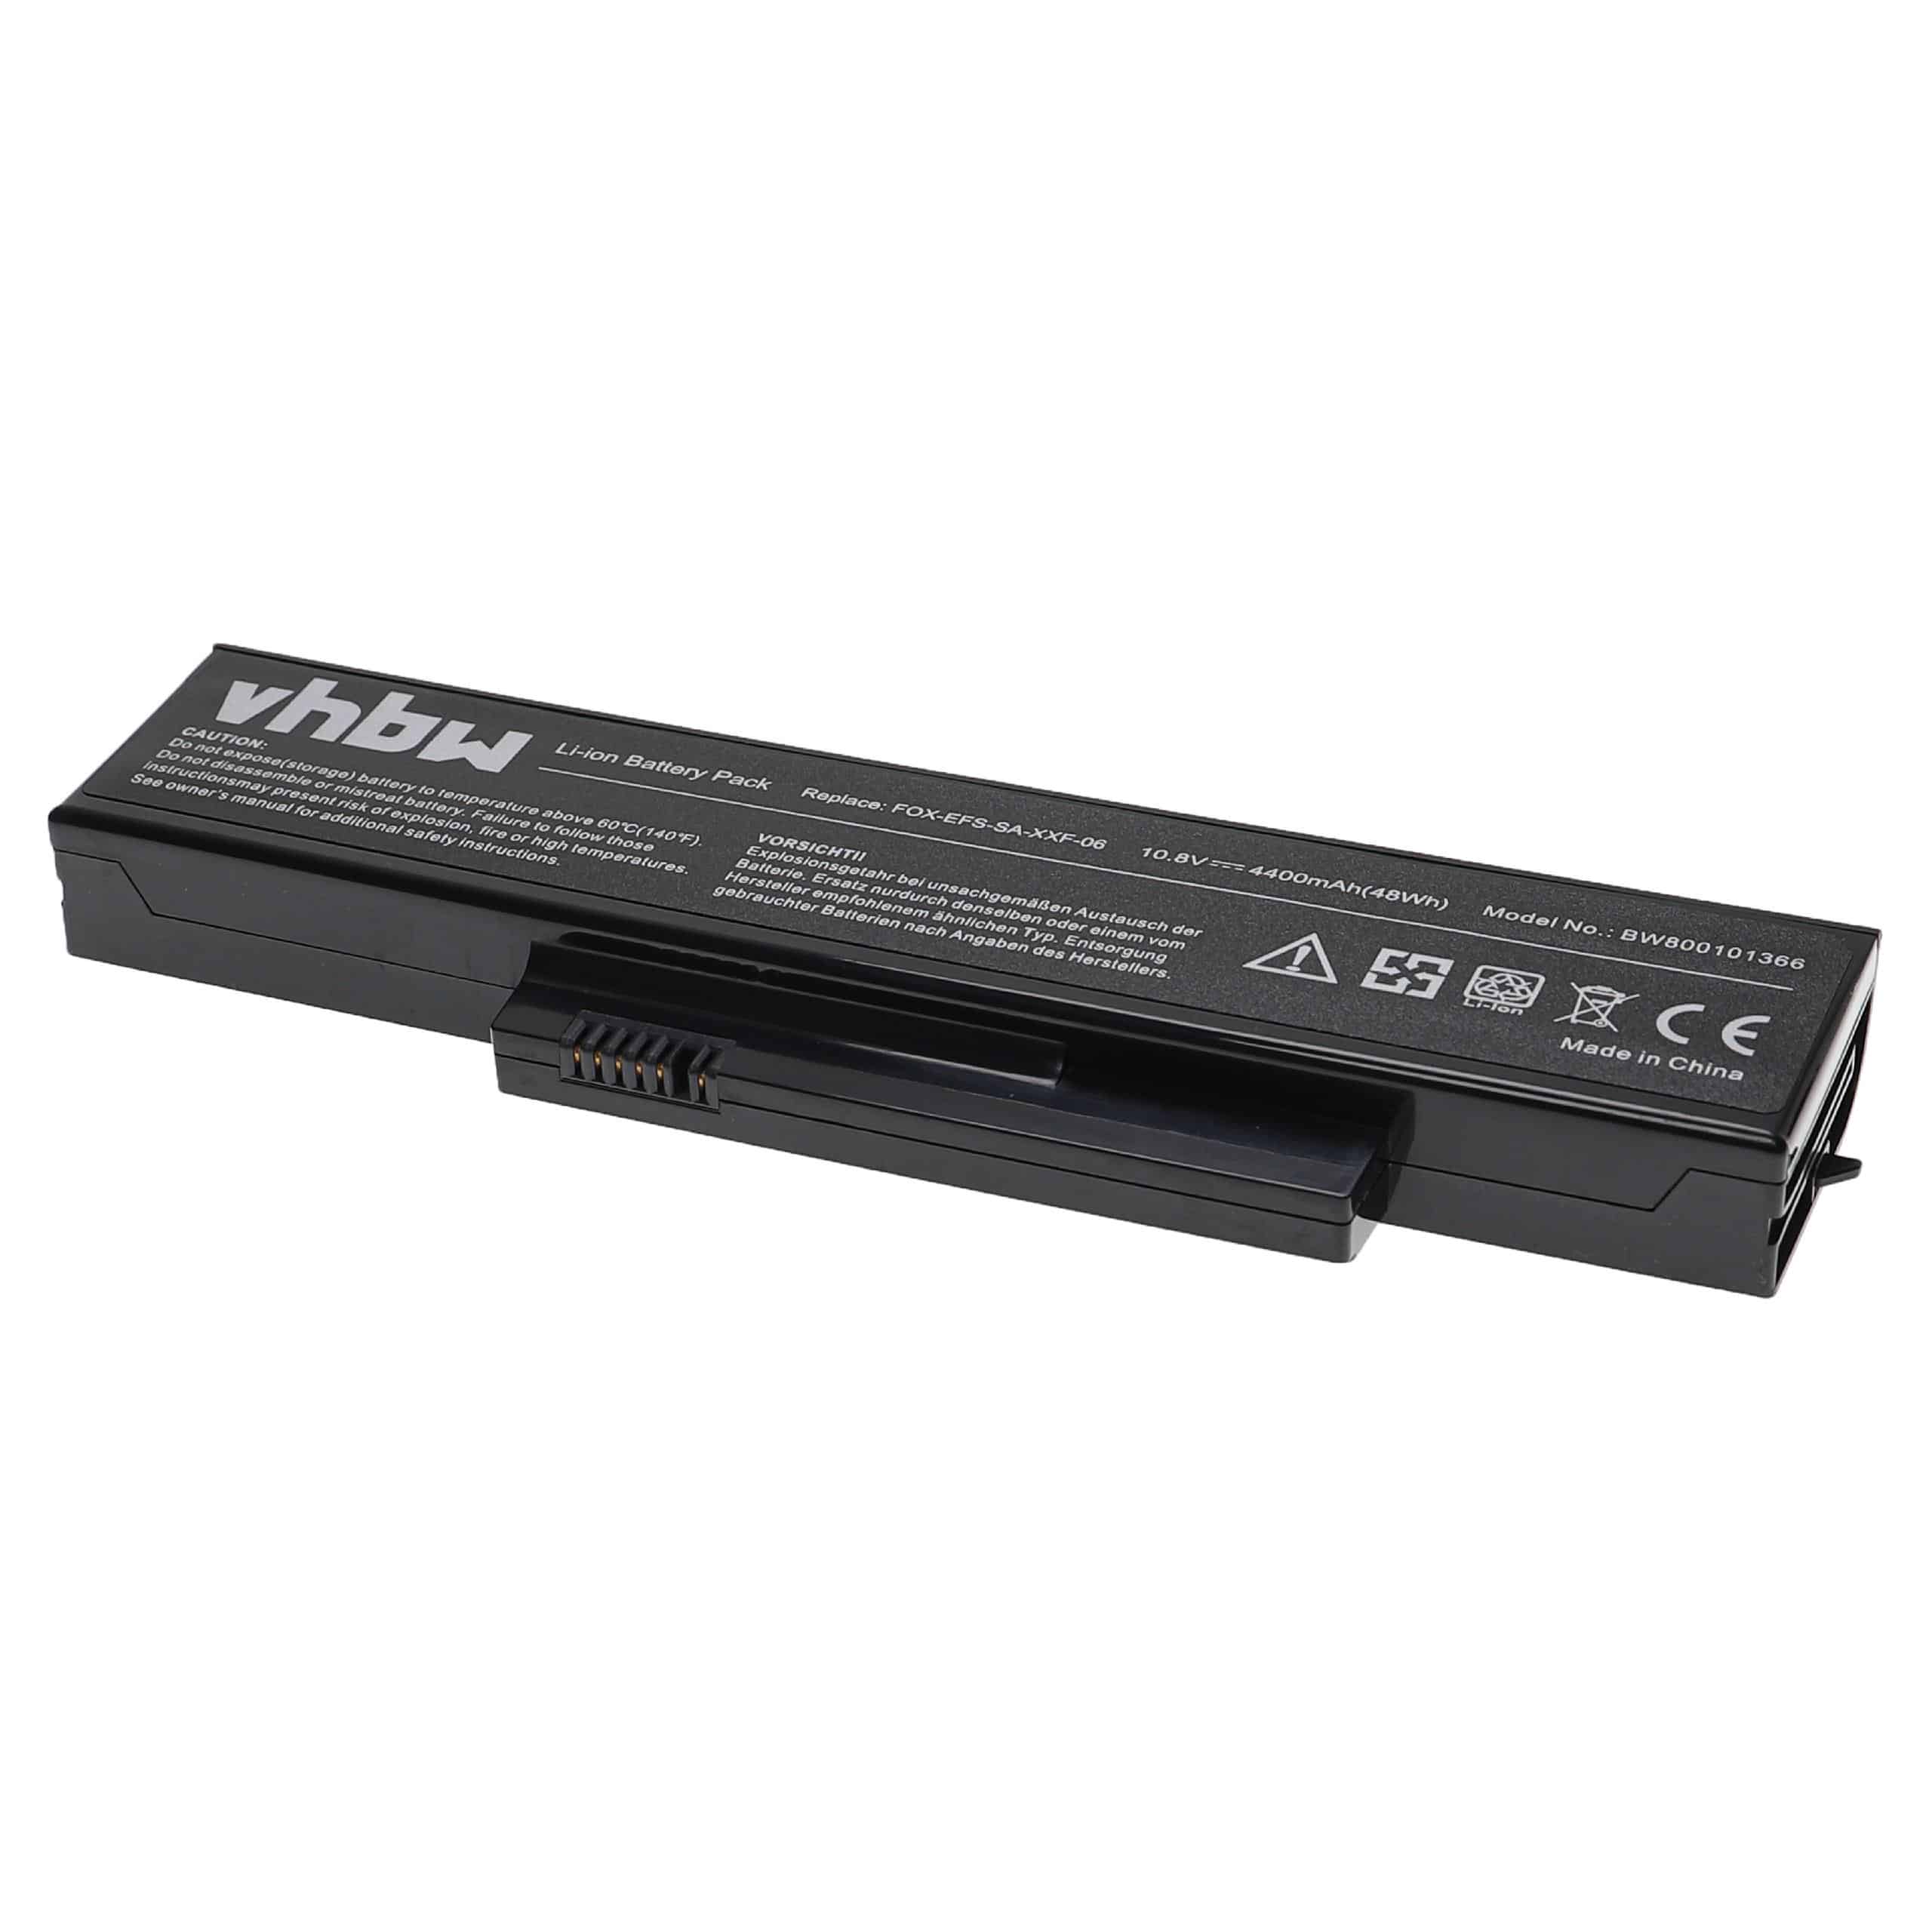 Akumulator do laptopa zamiennik Fujitsu-Siemens FOX-EFS-SA-XXF-06, FOX-EFS-SA-XXF-04 - 4400 mAh 10,8 V Li-Ion